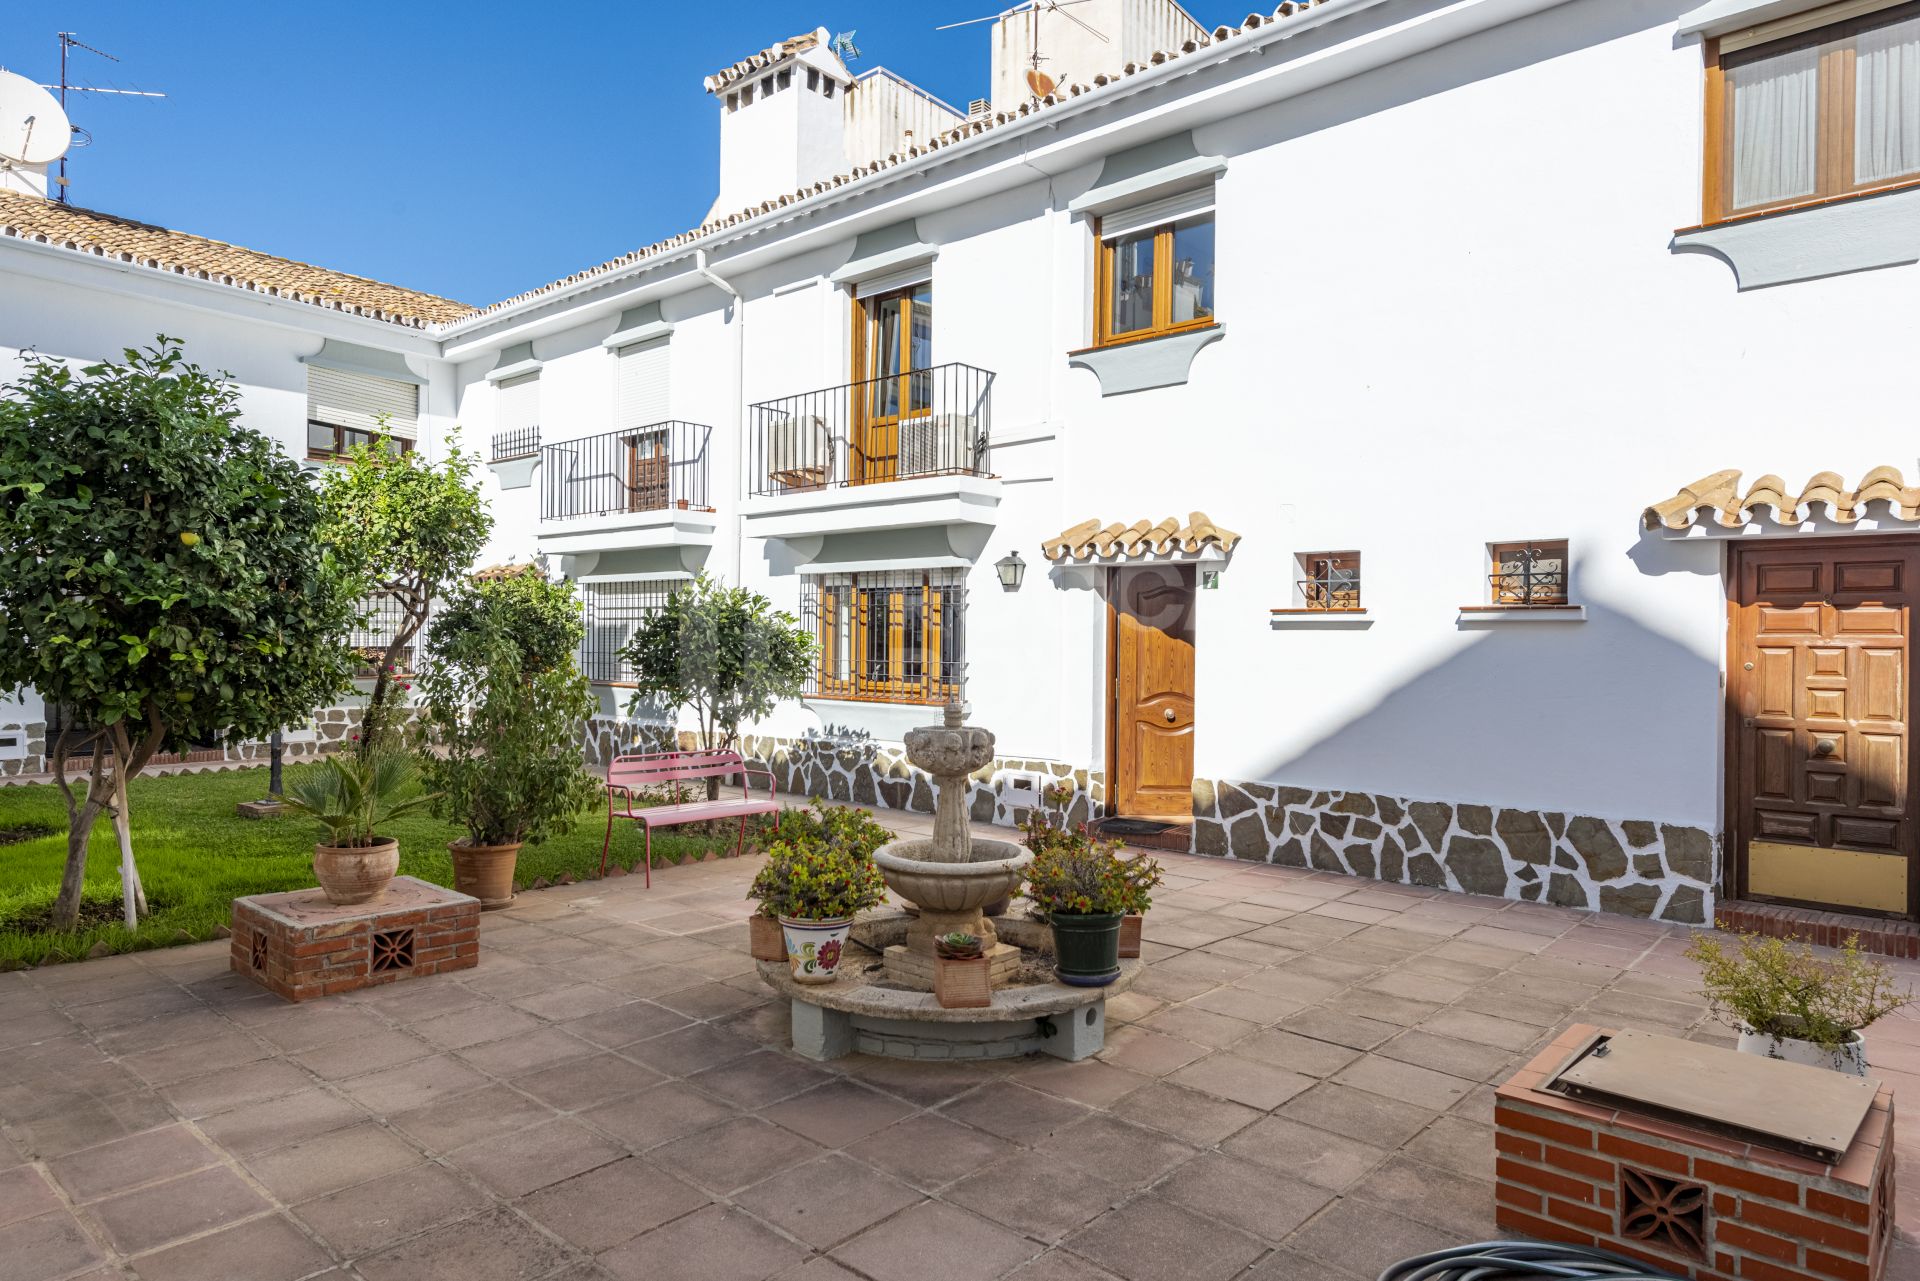 New property in the very heart of Fuengirola - Patio de Los Naranjos.